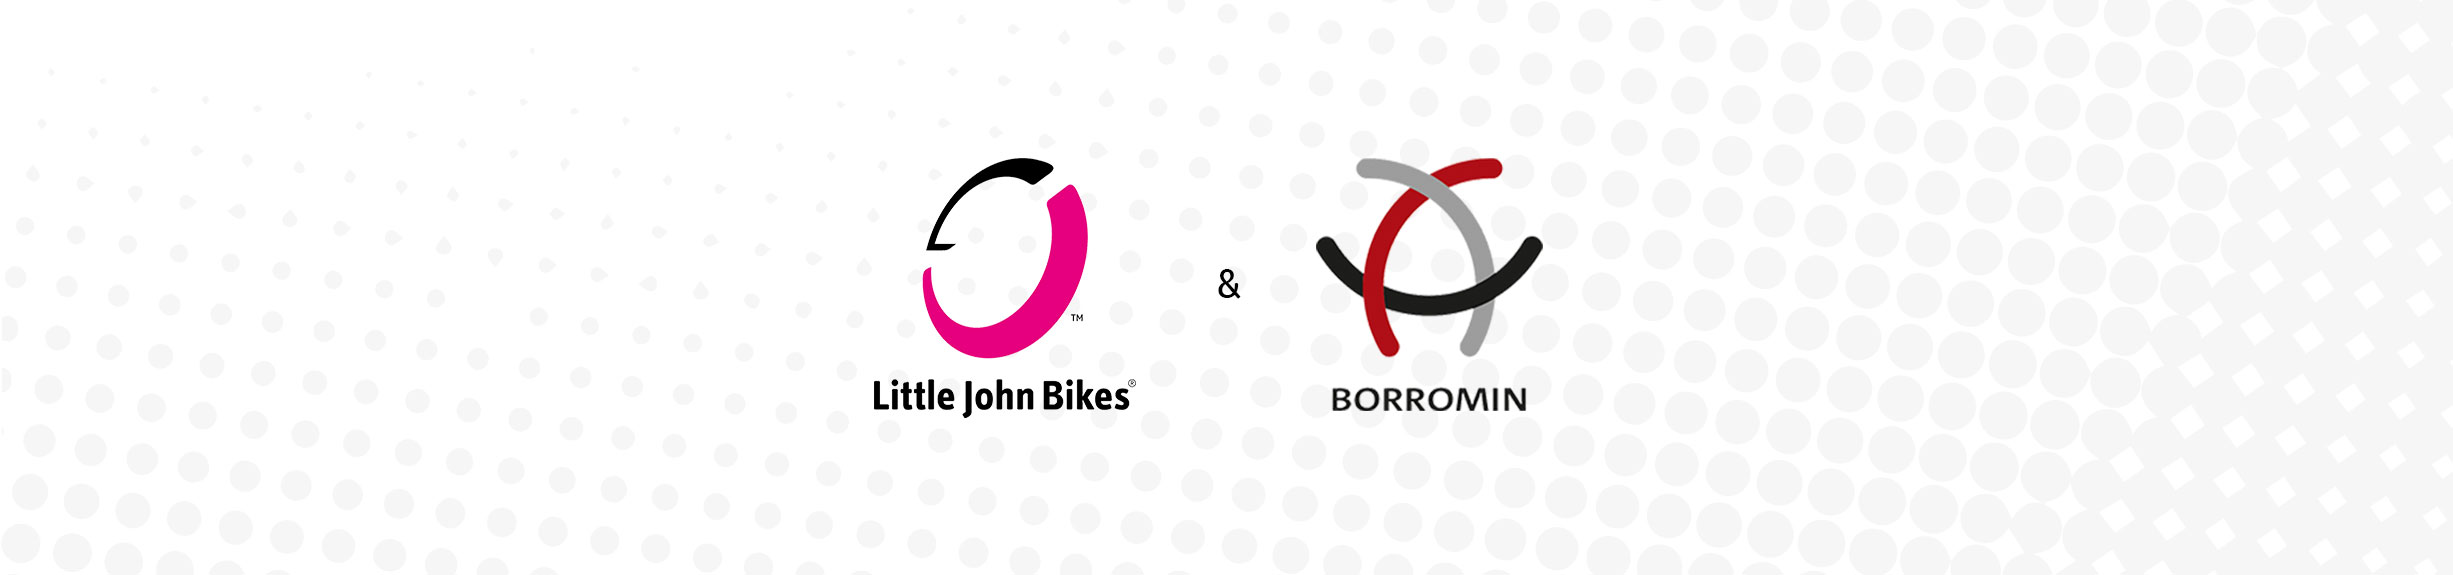 Visualisierung Gesellschafterwechsel bei Little John Bikes